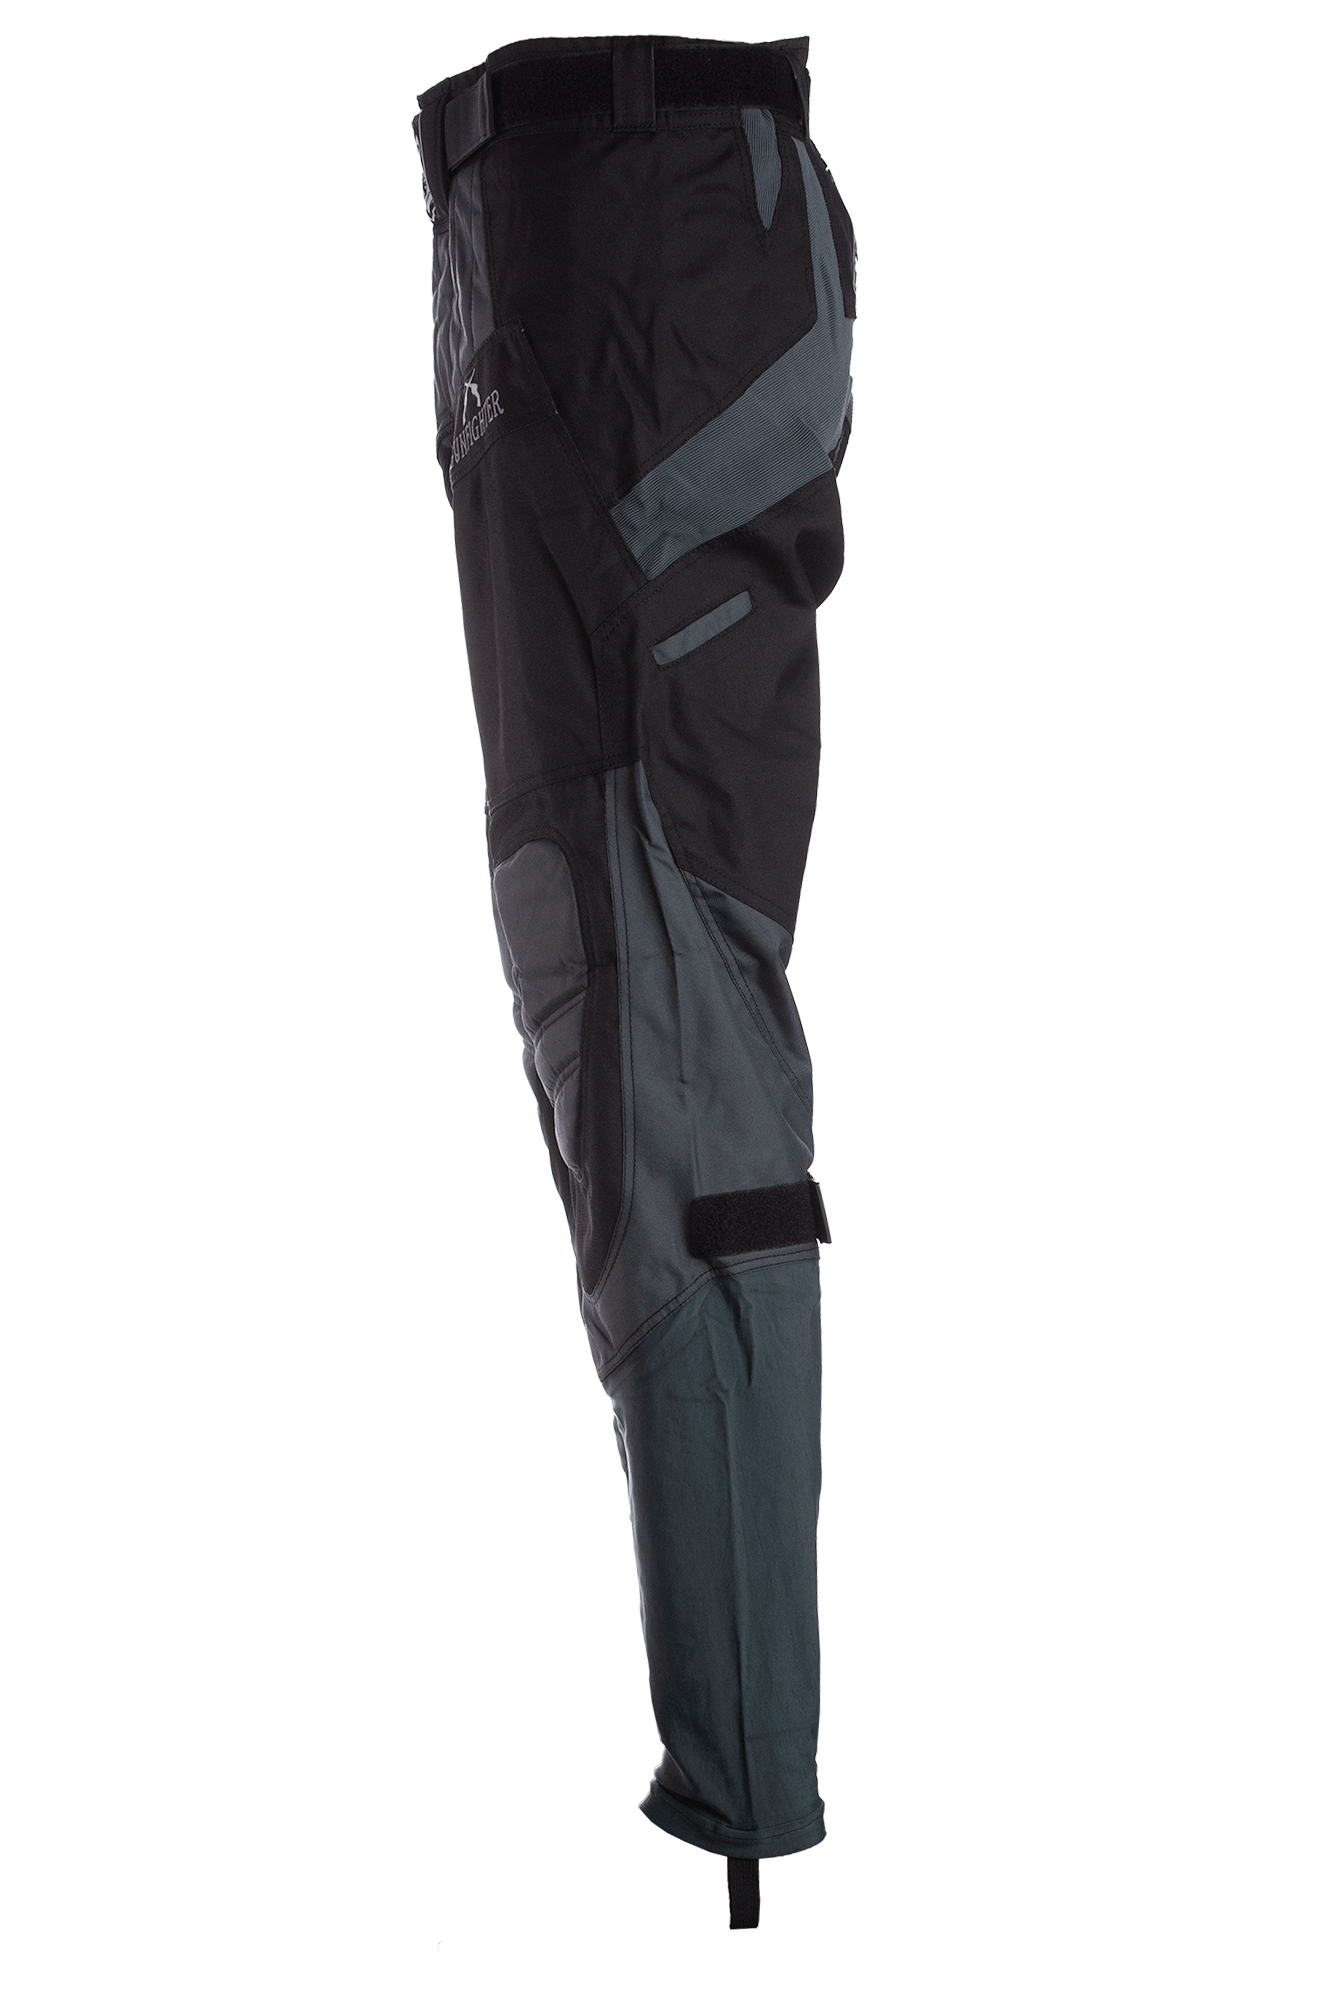 Gunfighter Sports Stirrup Pants - Black/Grey